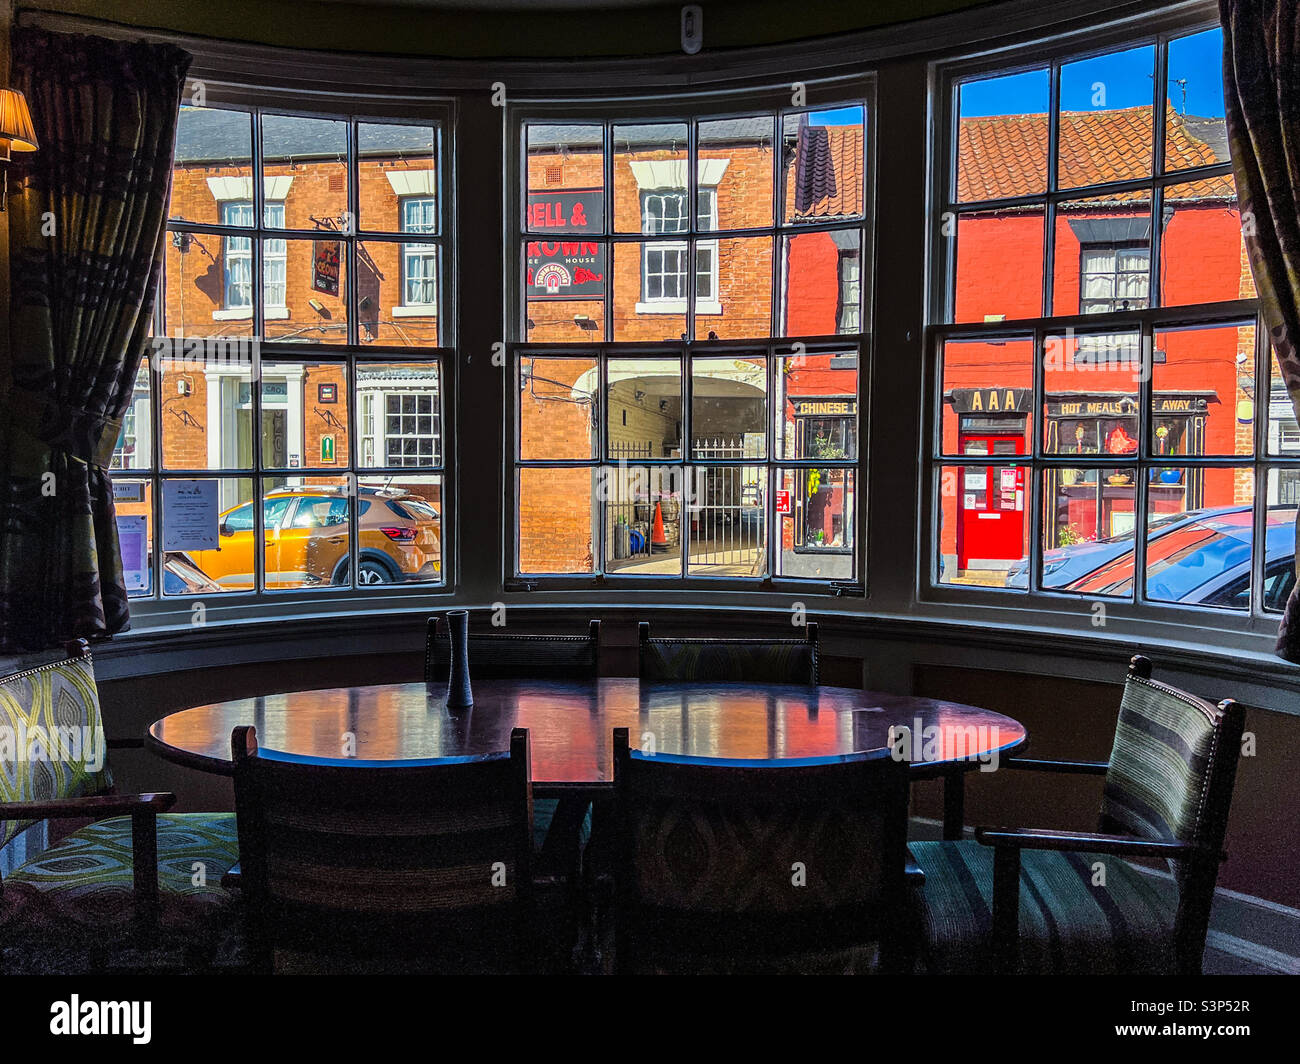 Vista desde un ventanal dentro de un pub local Foto de stock